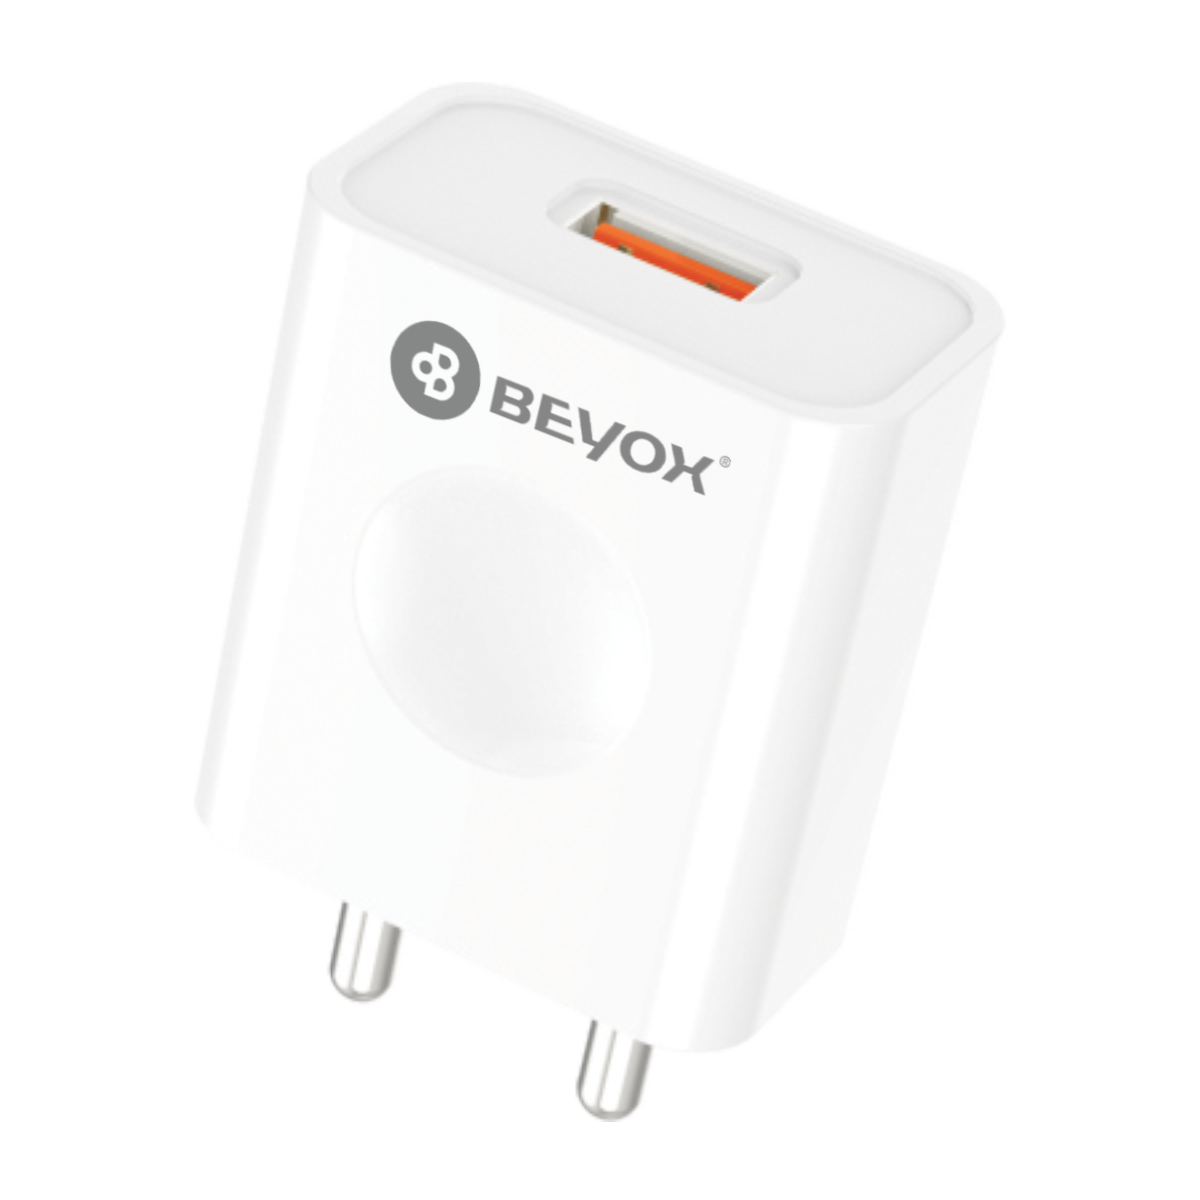 Beyox 2.4A Smart USB Charger